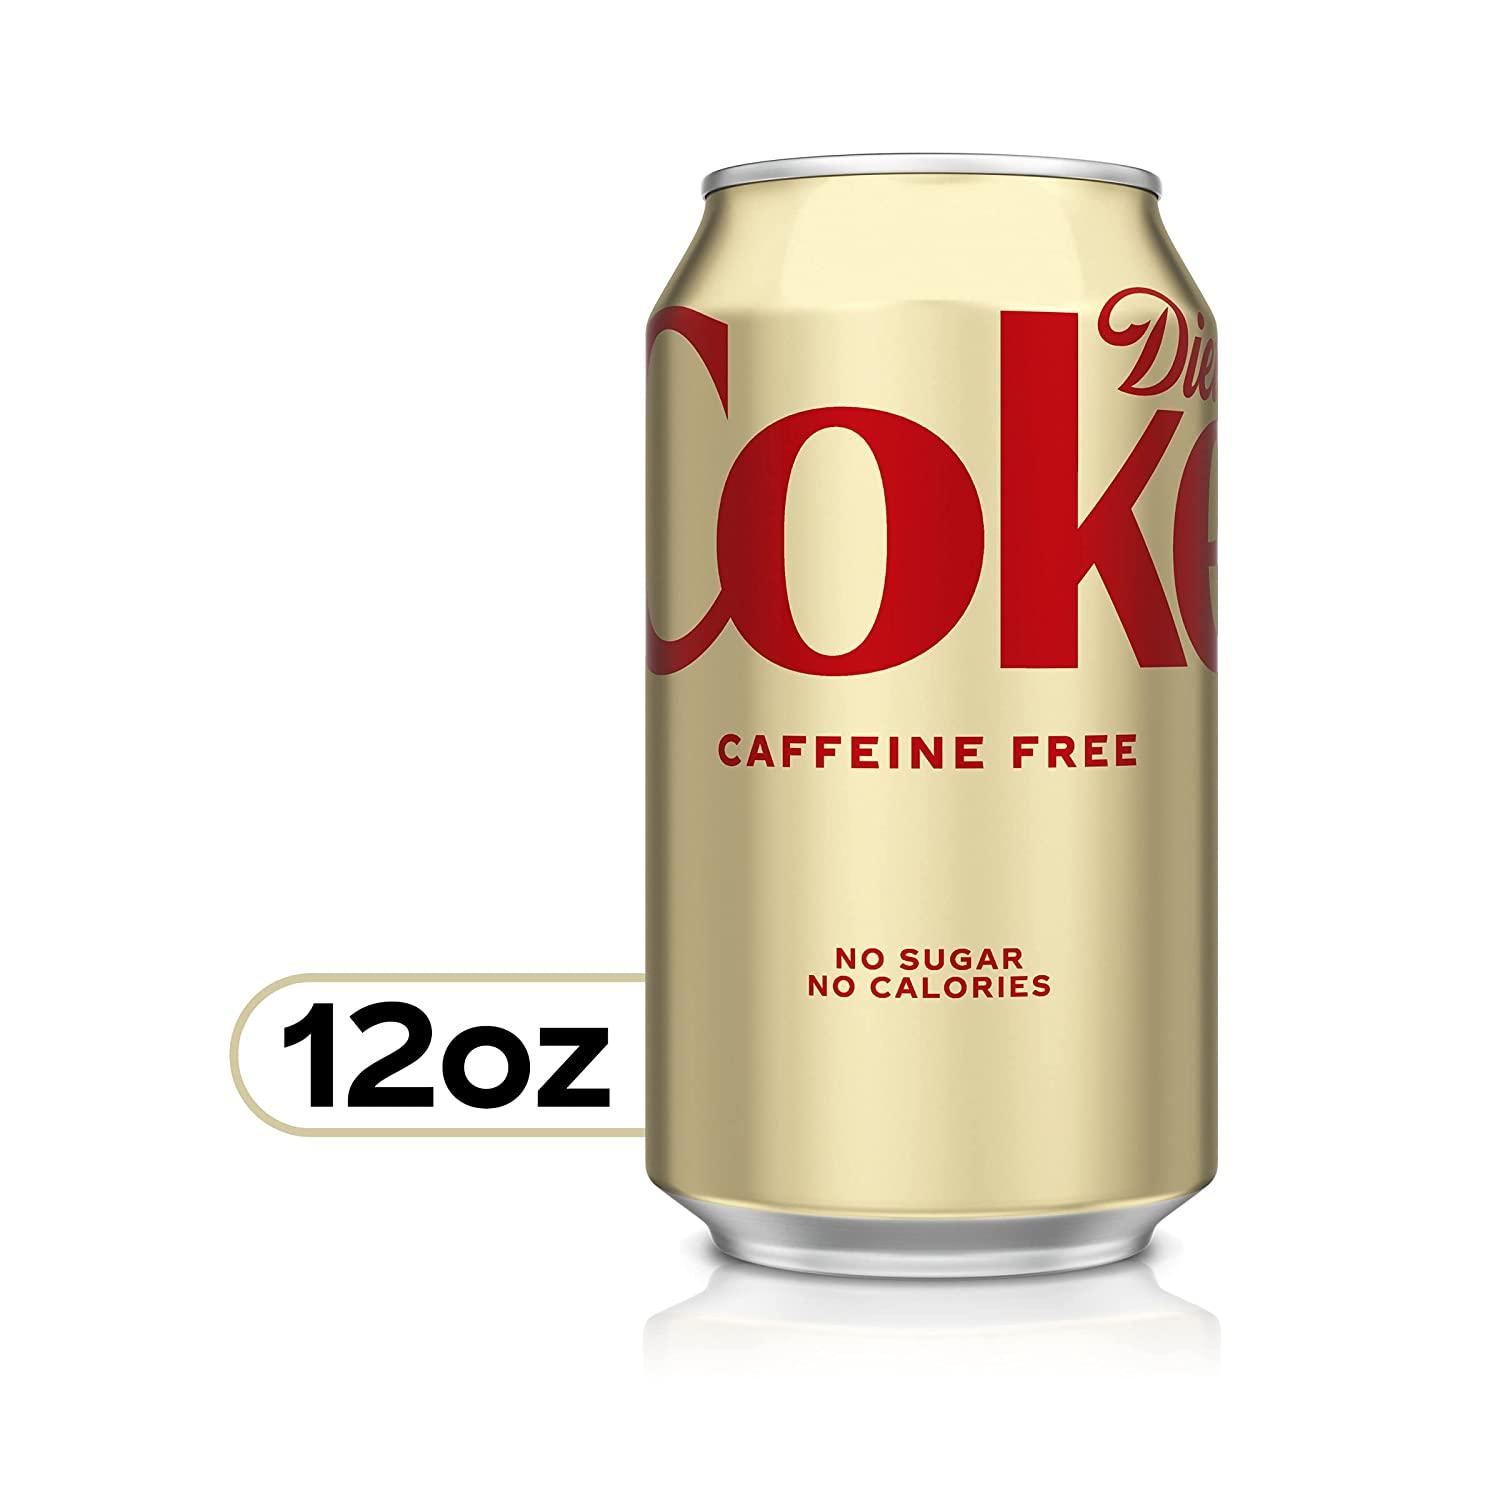 Caffeine Free Diet Coke, 12 fl oz, 24 Pack